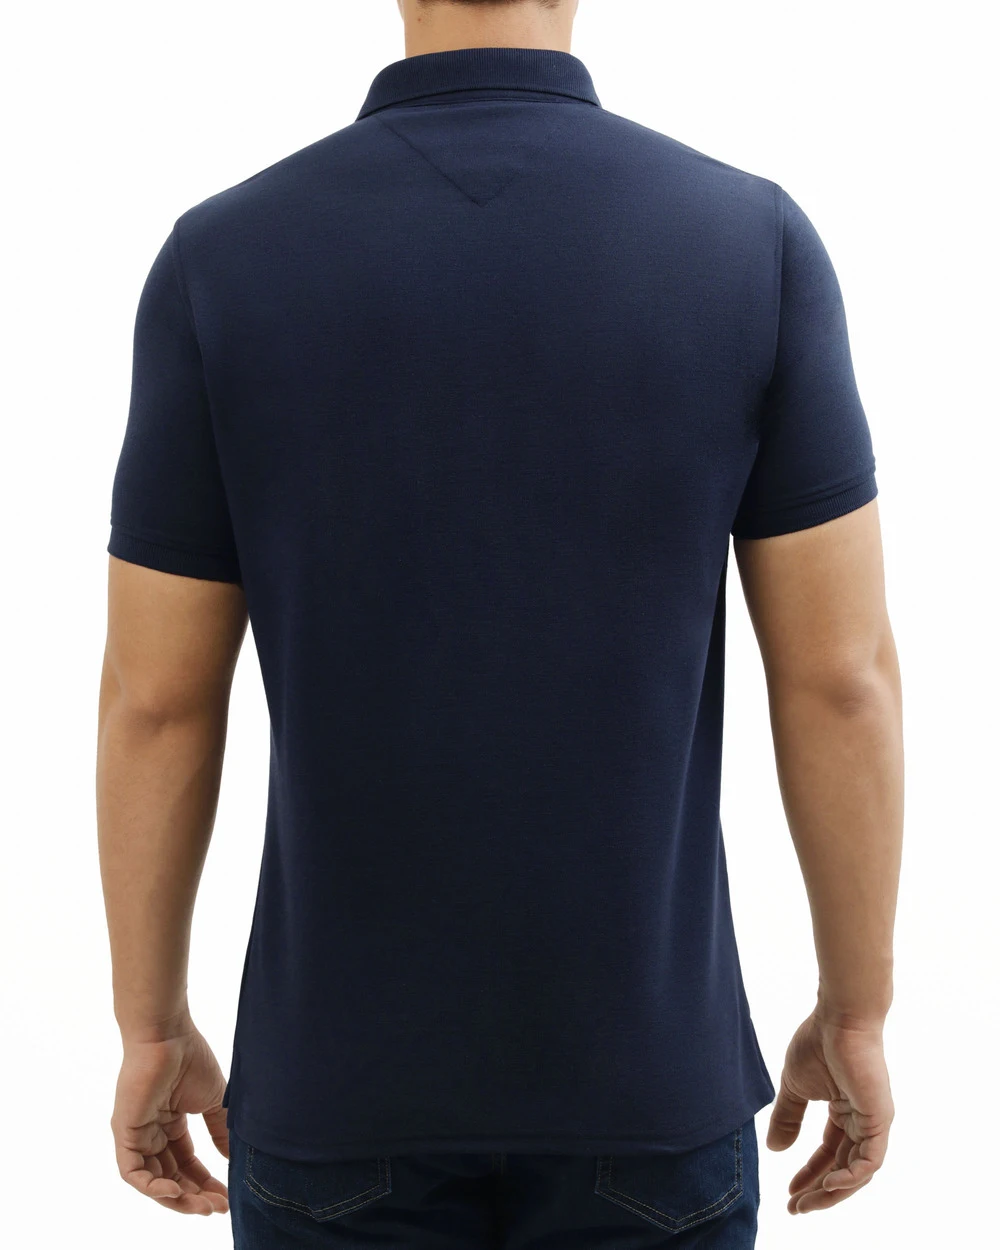 Camisa sport lisa slim fit manga corta   cooling tech azul